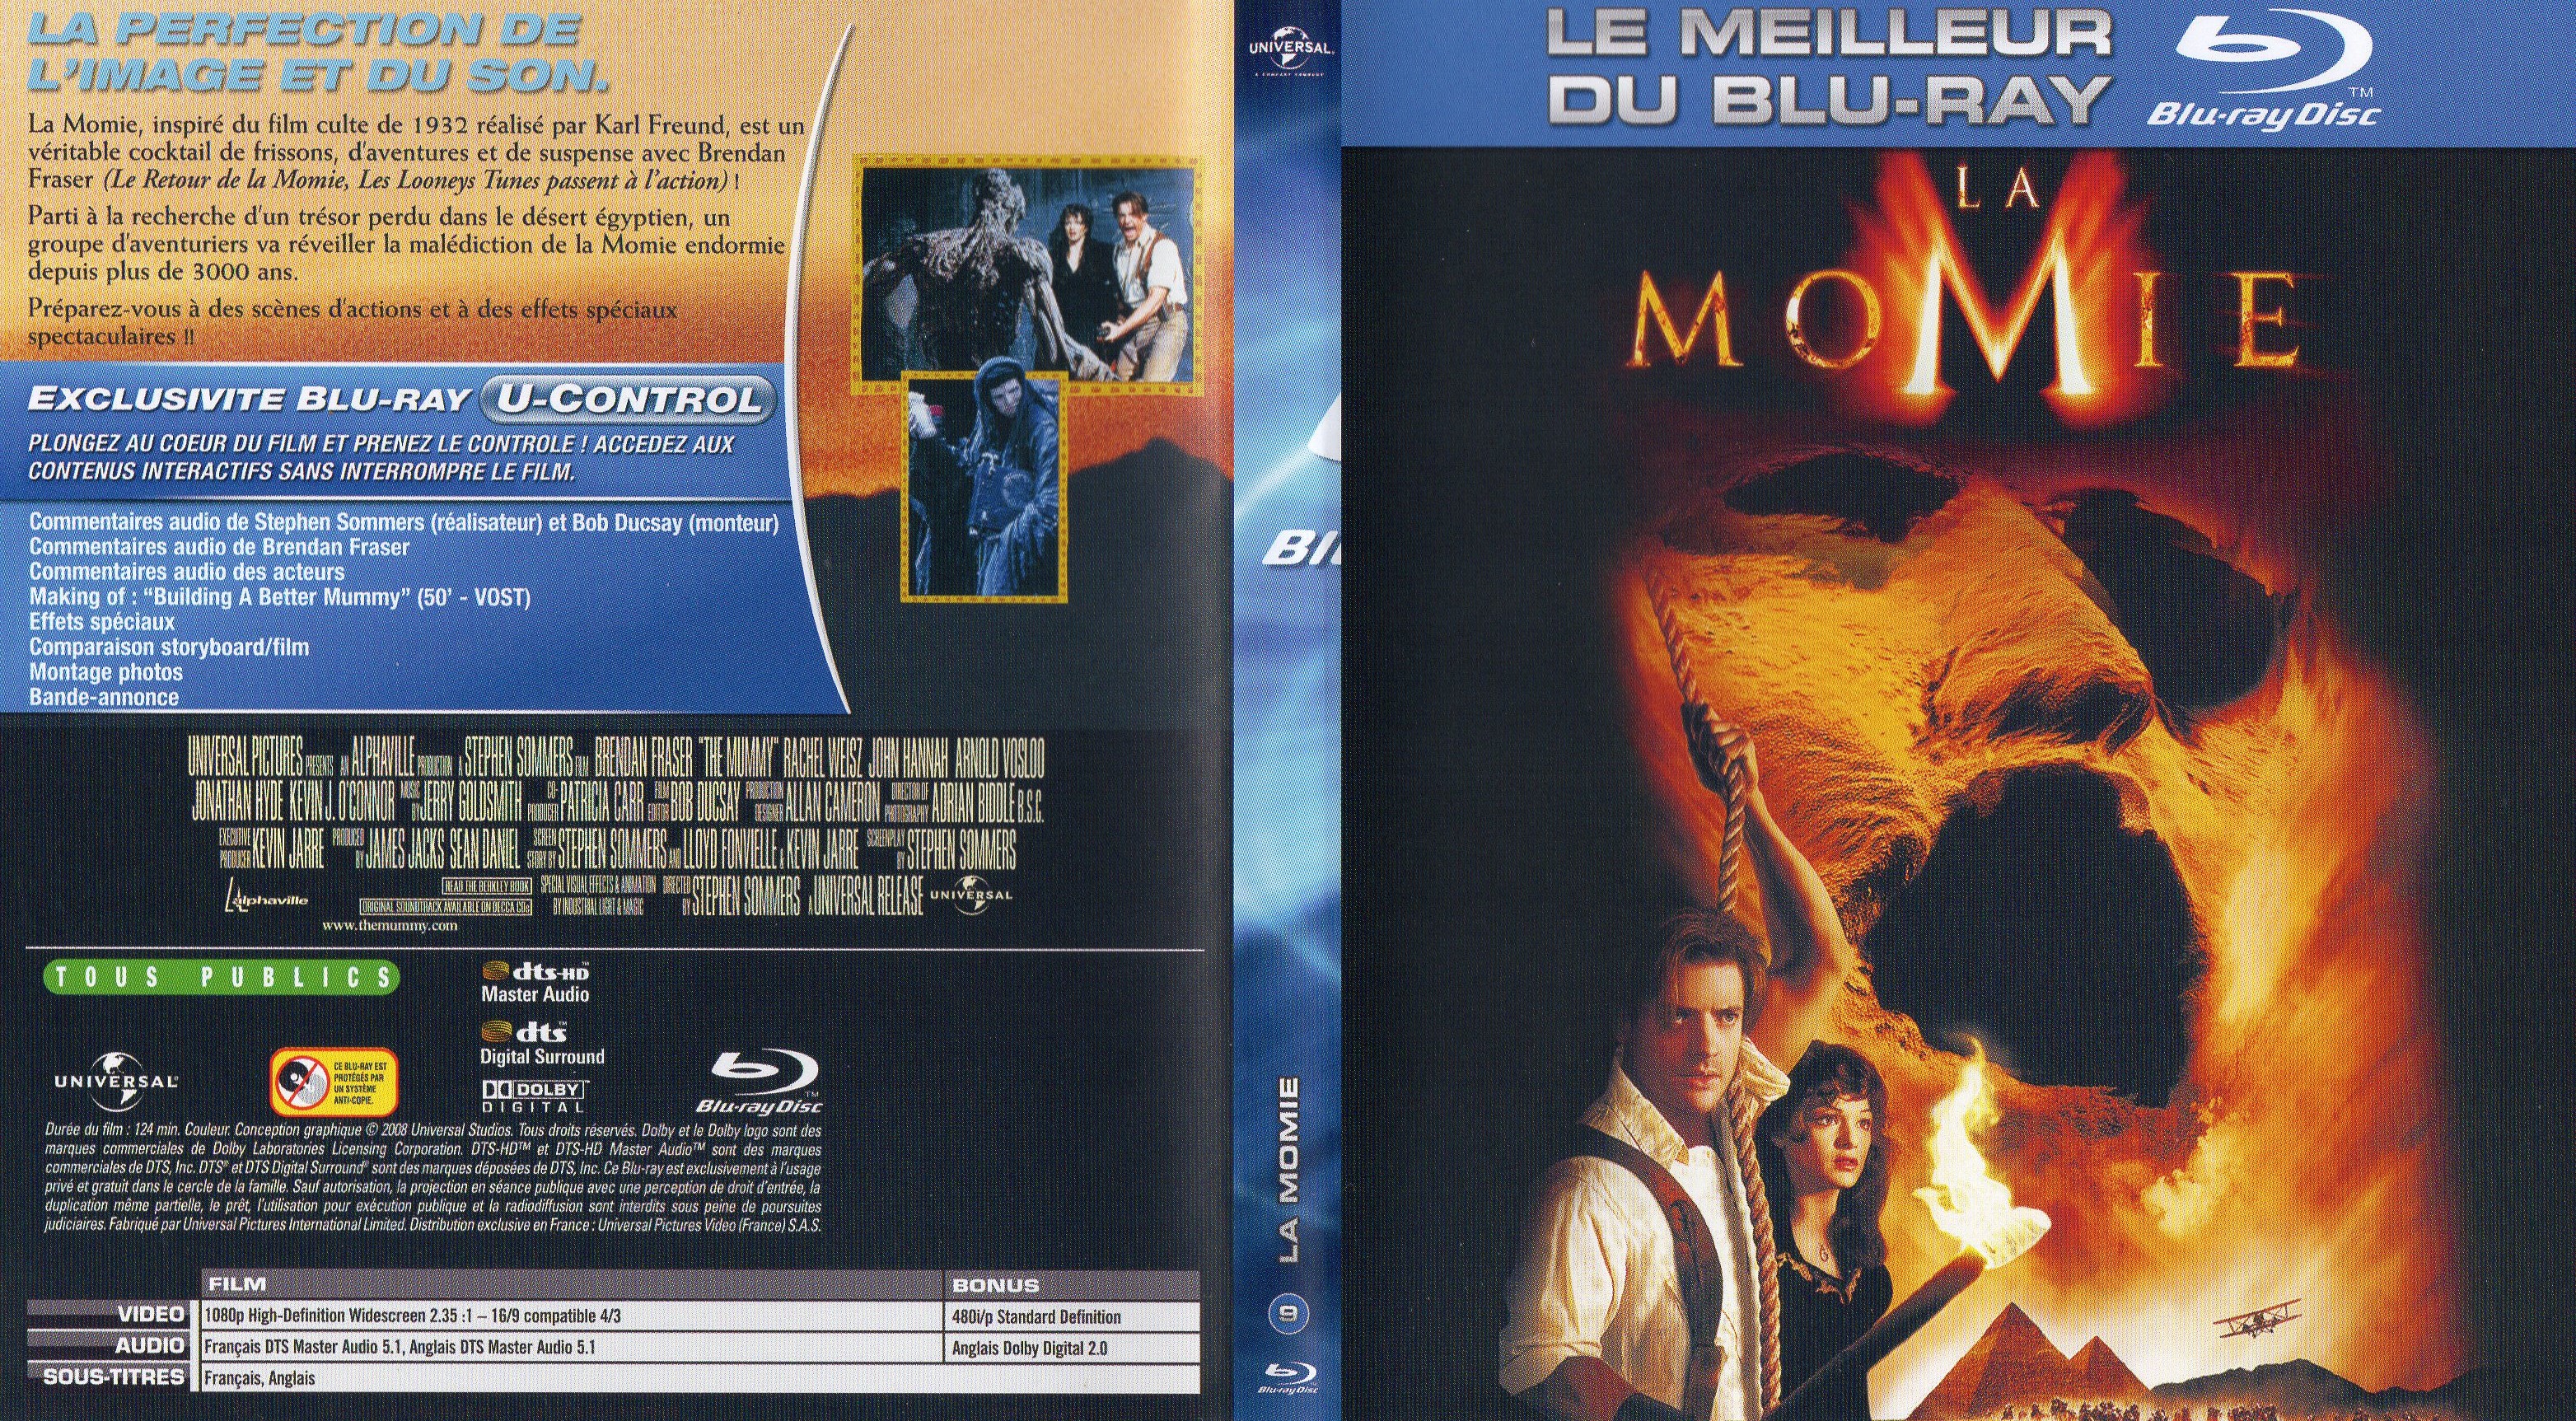 Jaquette DVD La momie (BLU-RAY) v2